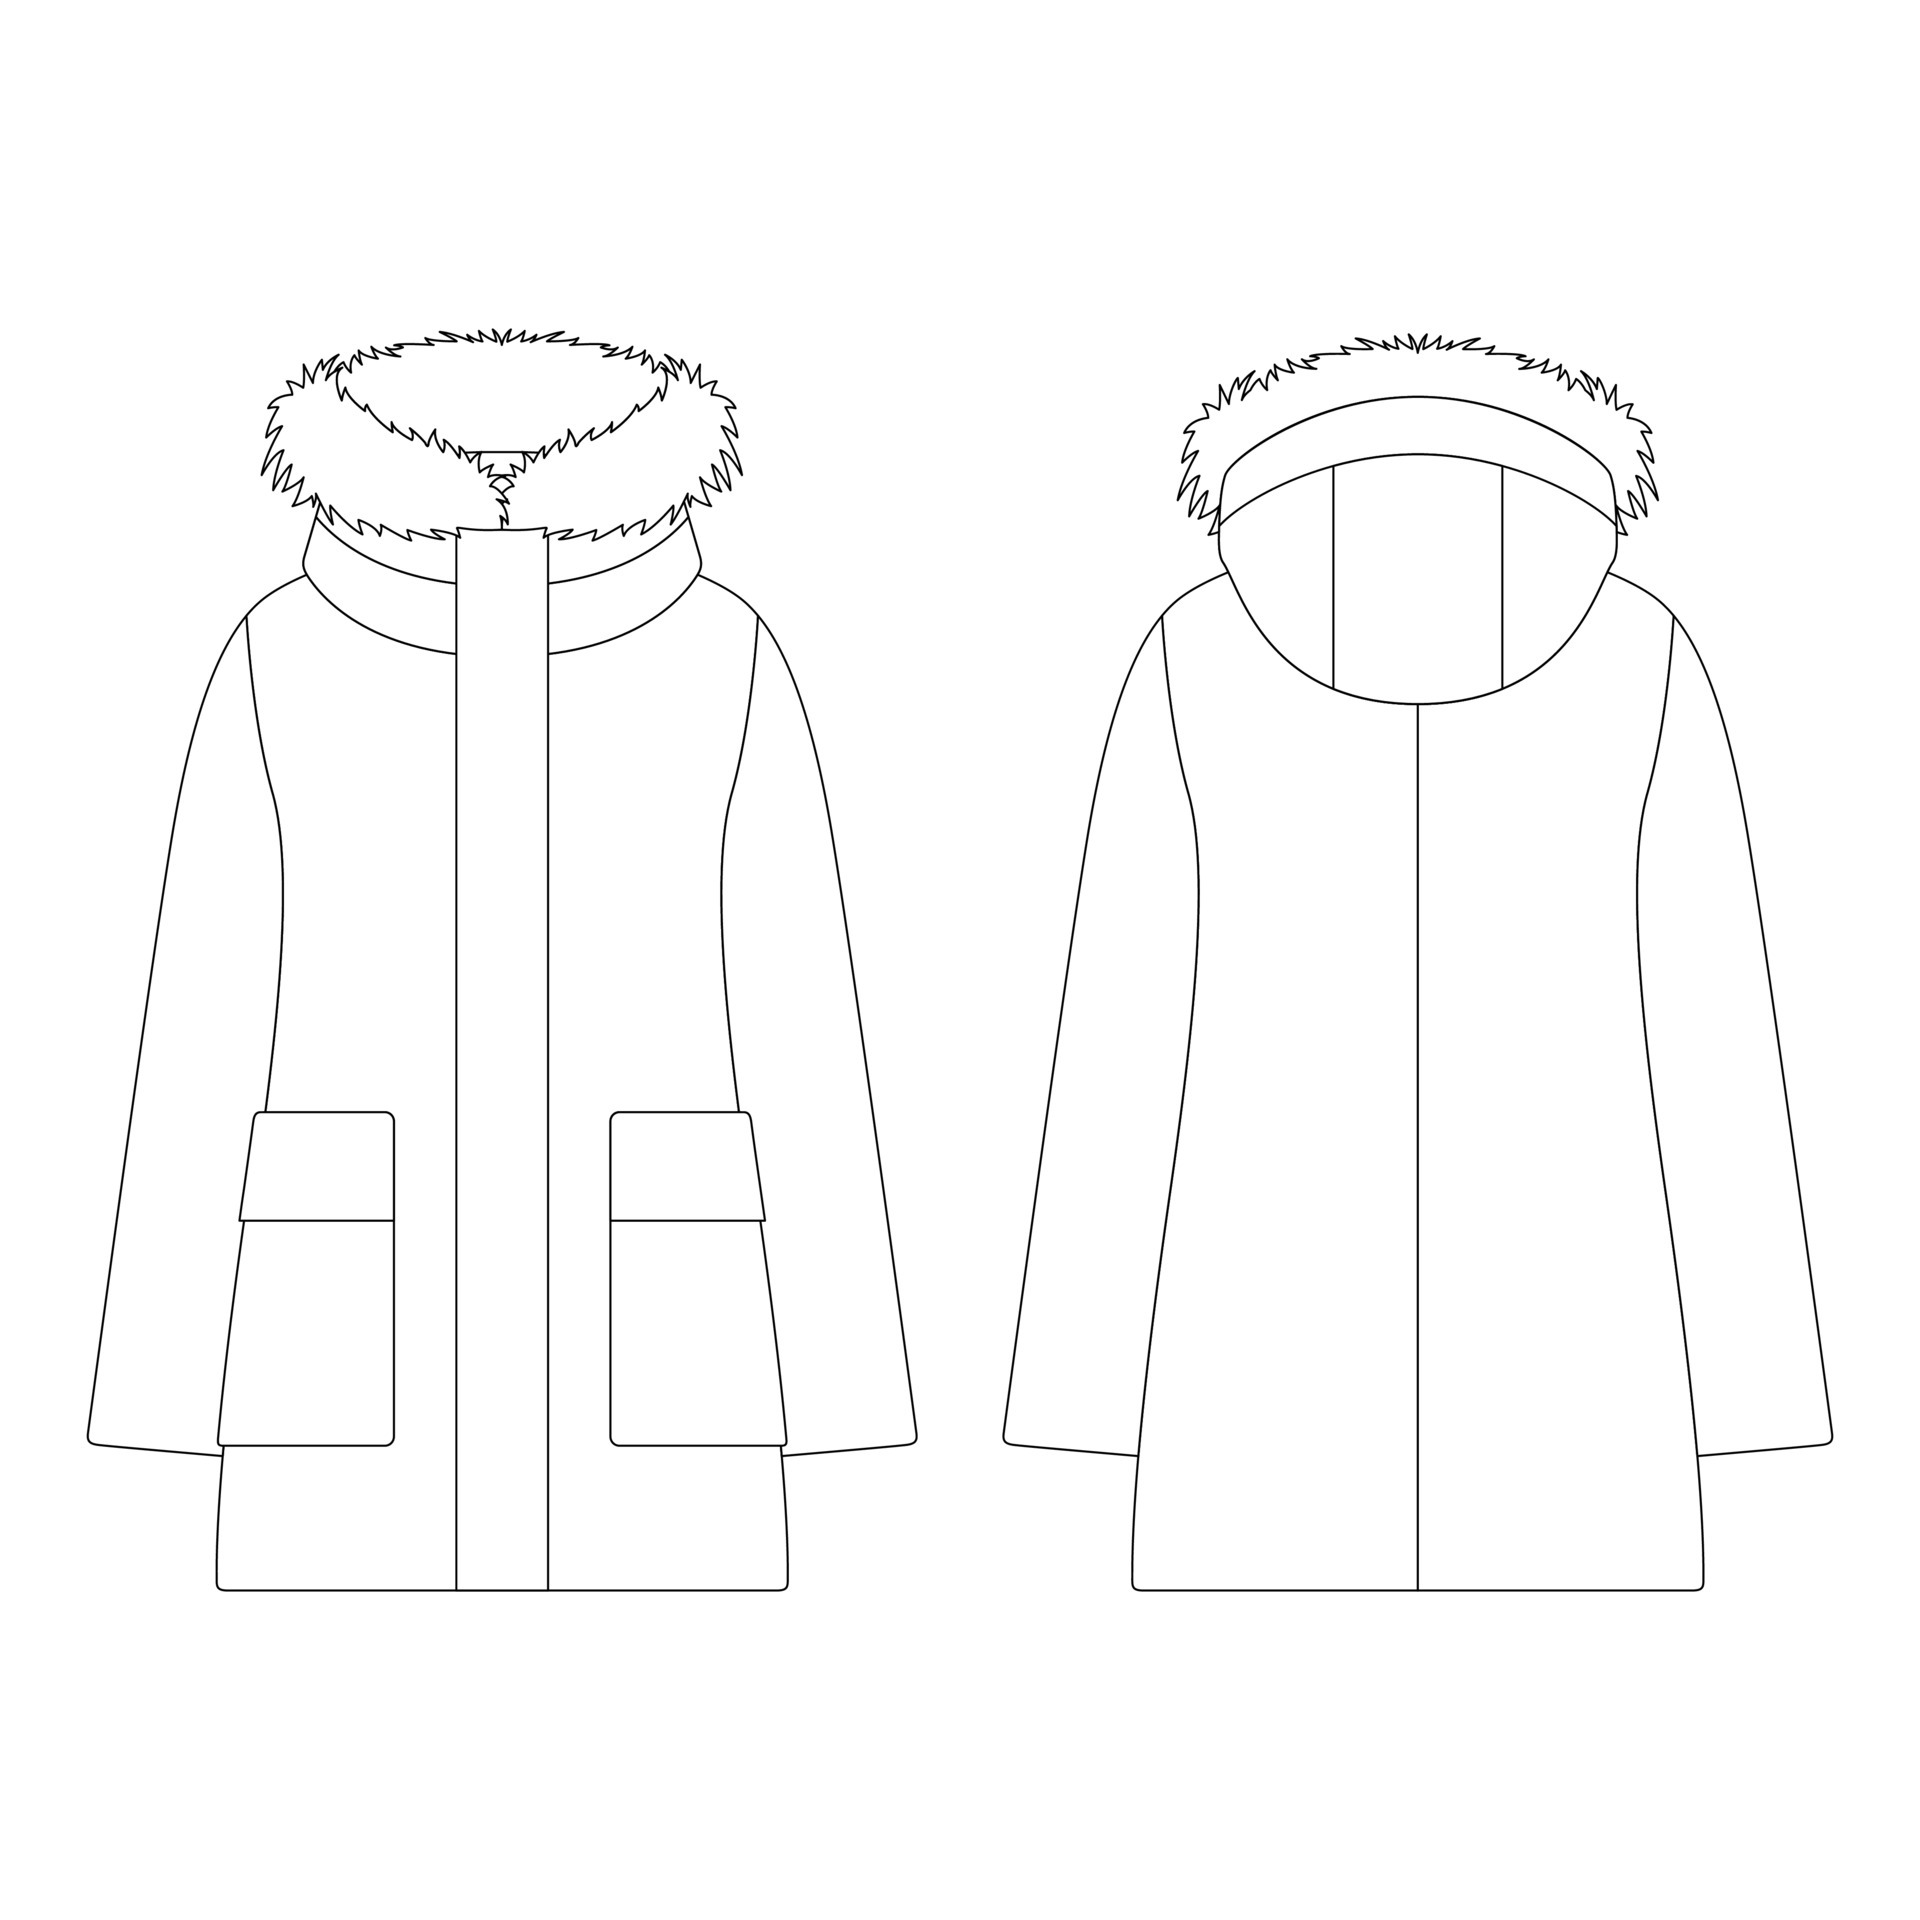 Jean Patou, French Haute Couture Fashion Sketch - Trench Coat | Chairish